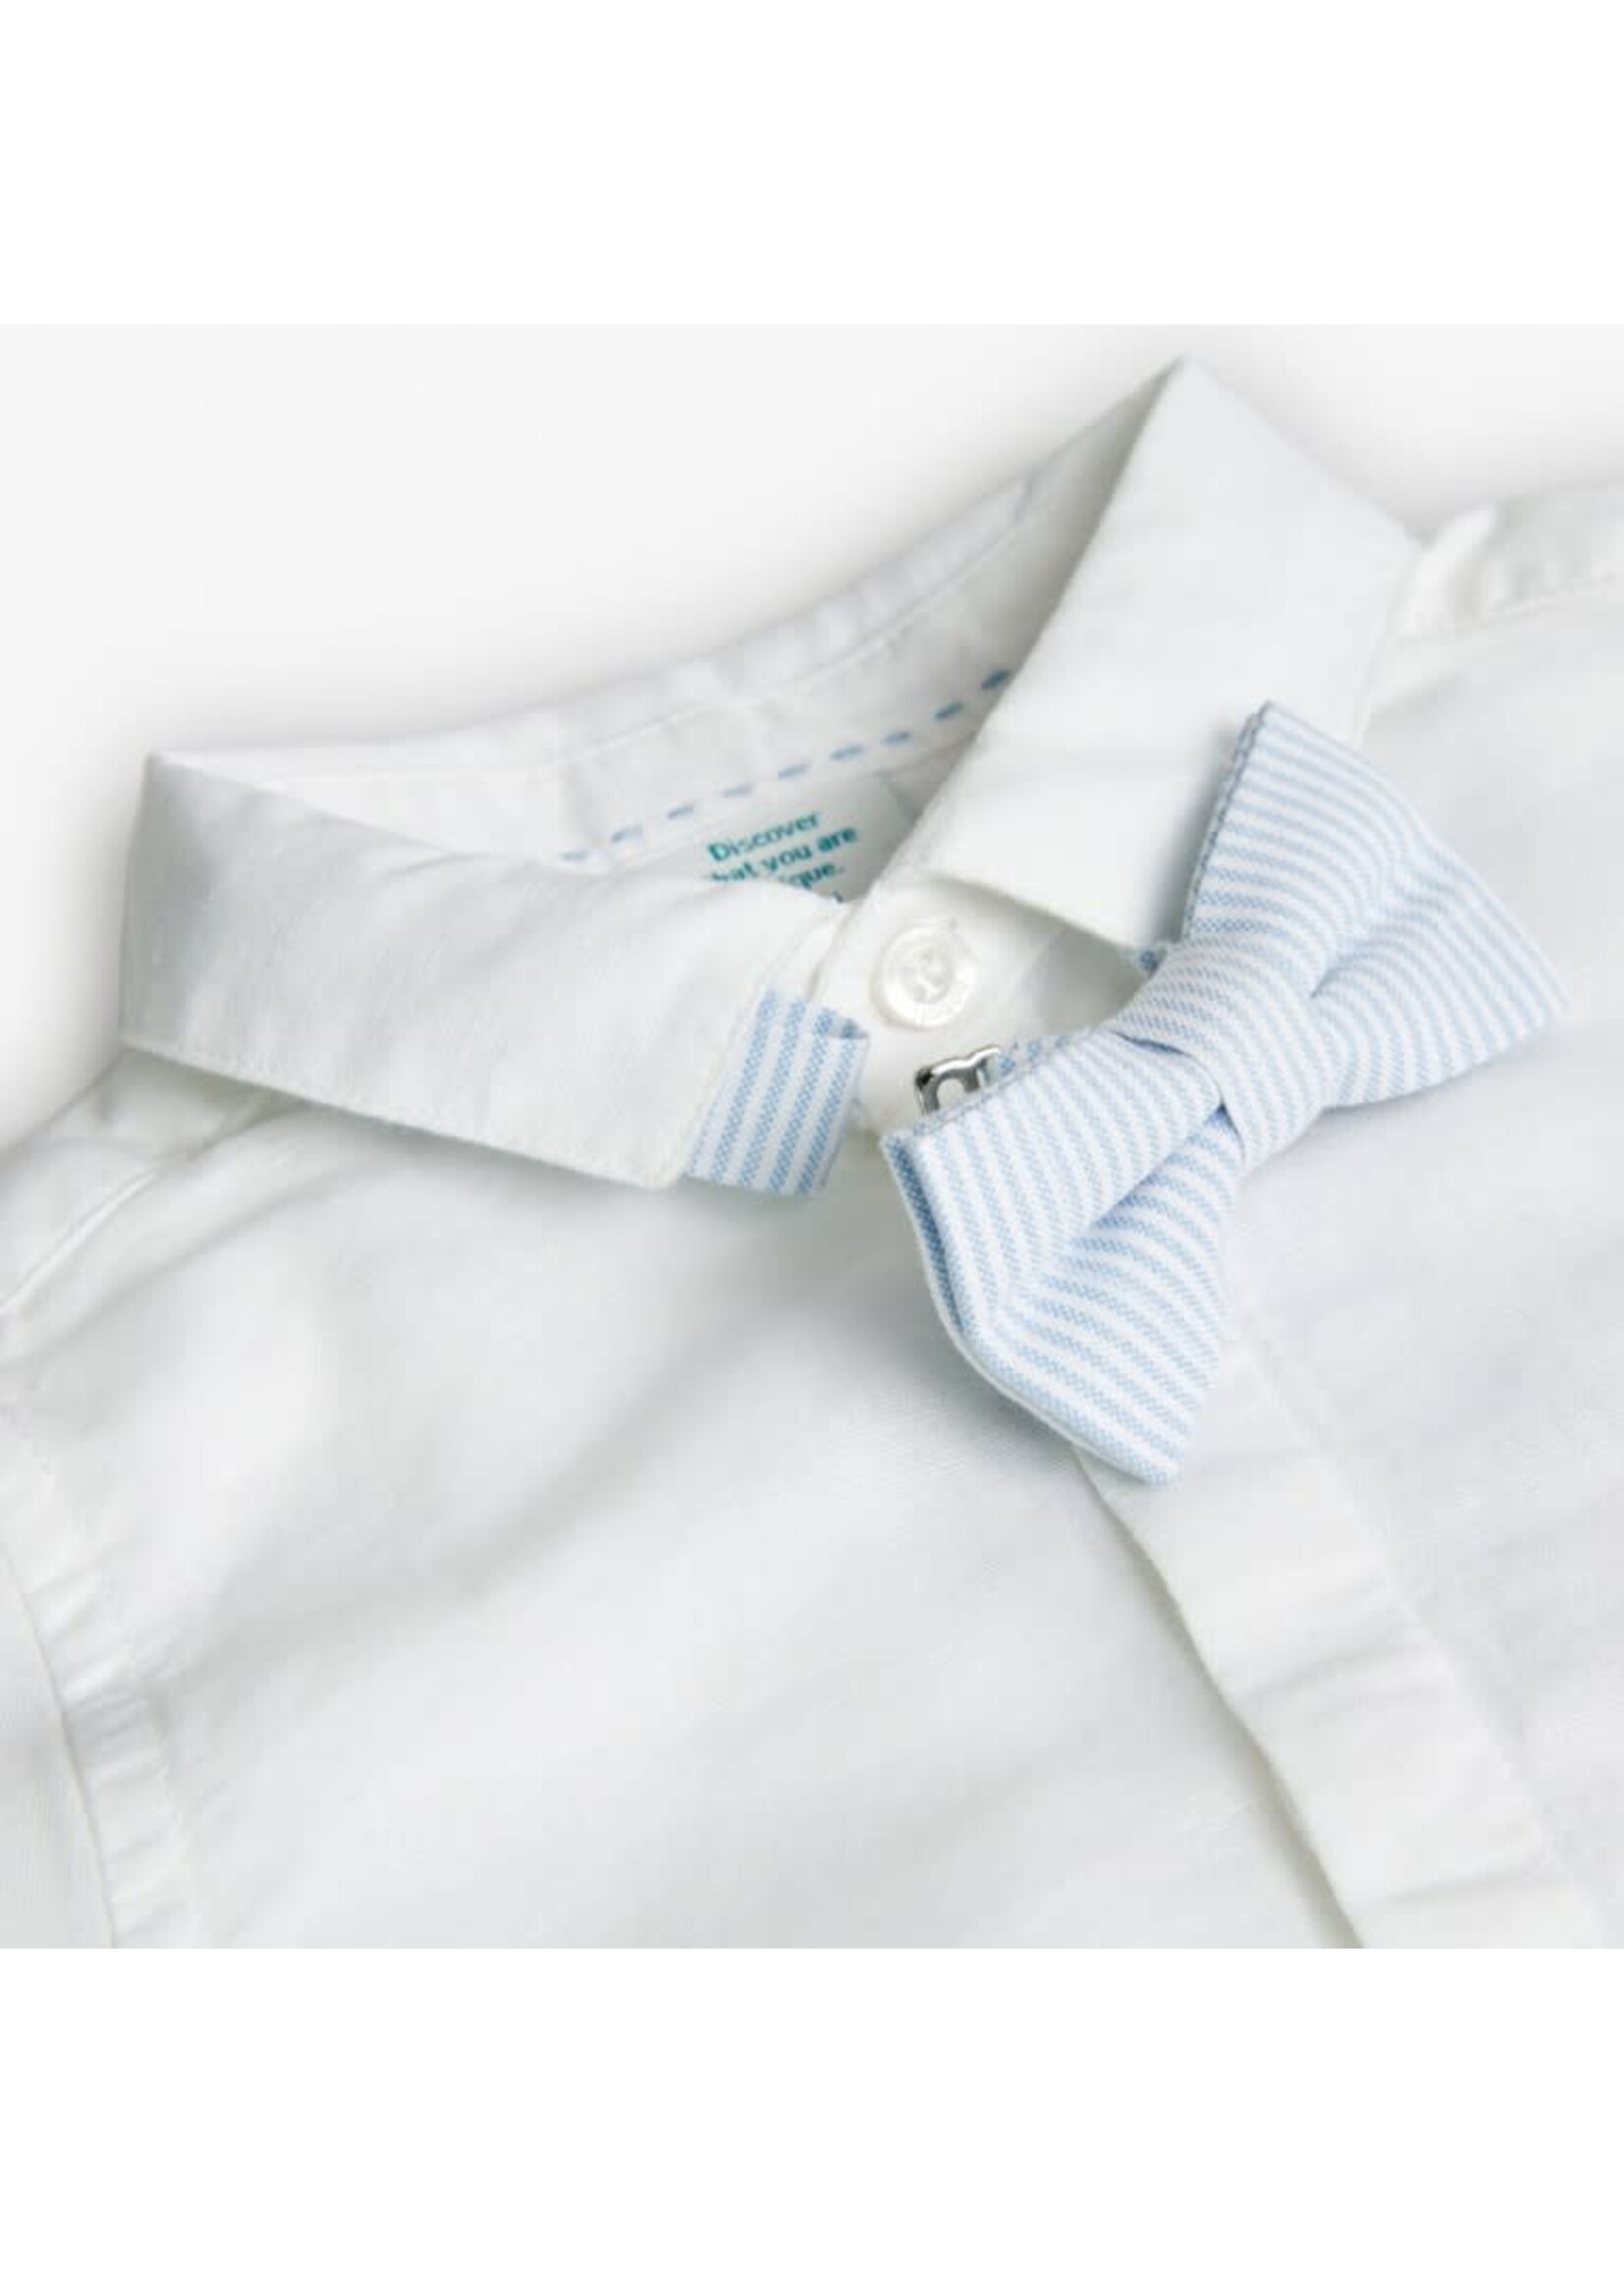 Boboli Shirt linen for  boy white 718242